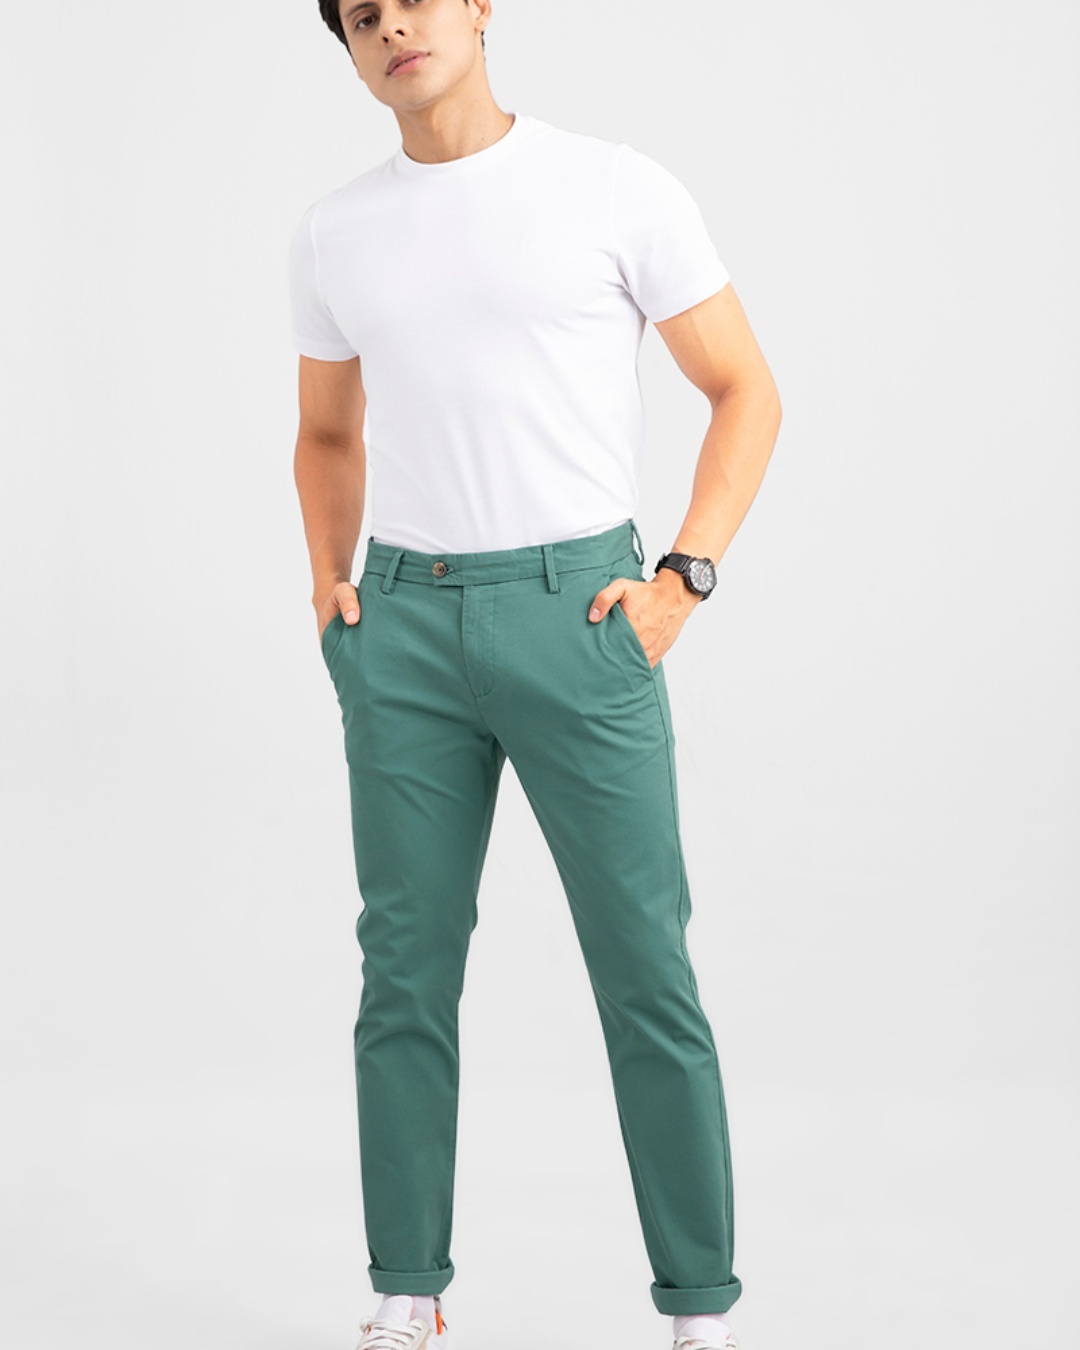 Shop Men's Green Slim Fit Chinos